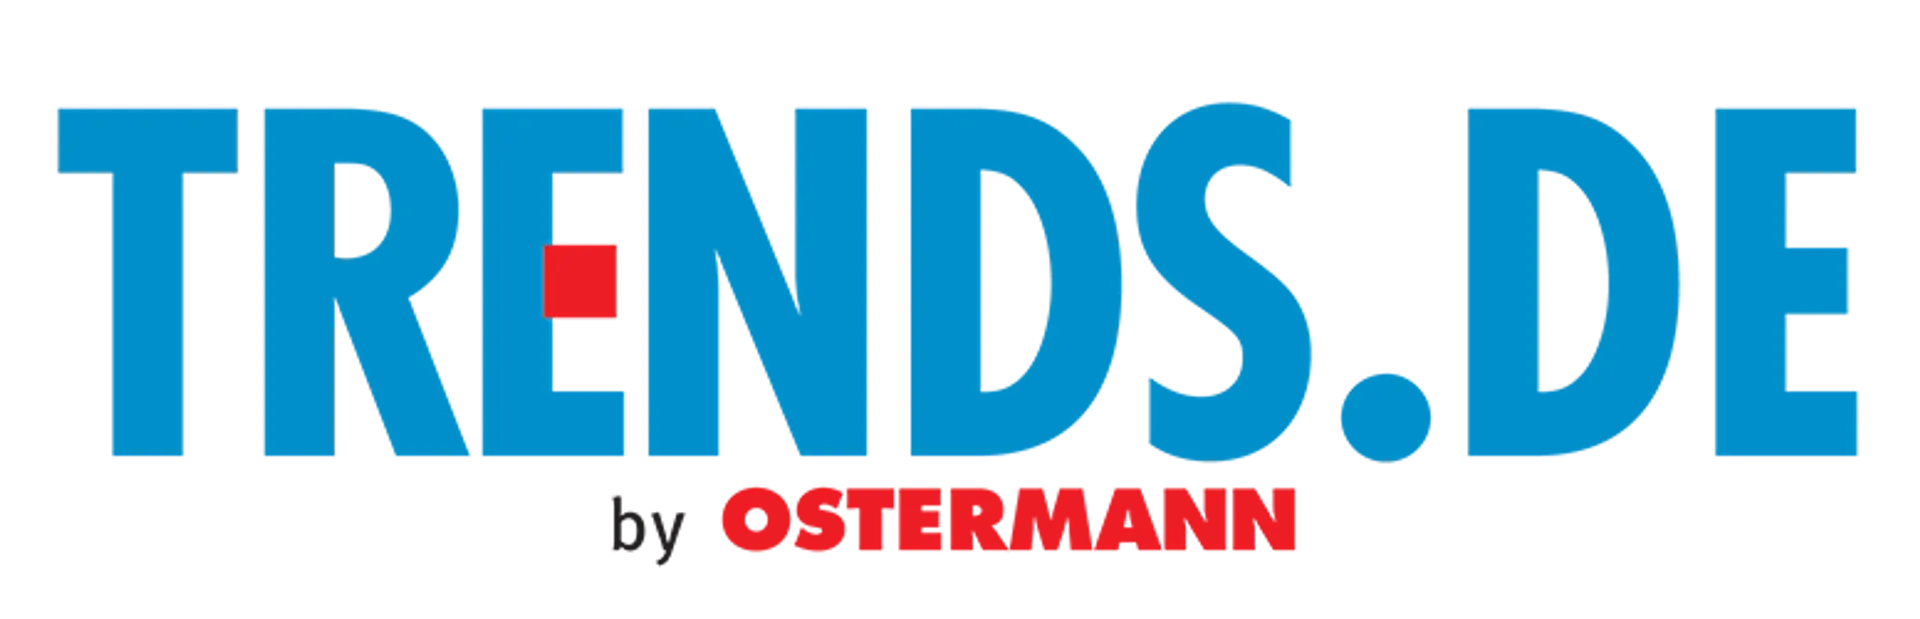 TRENDS logo